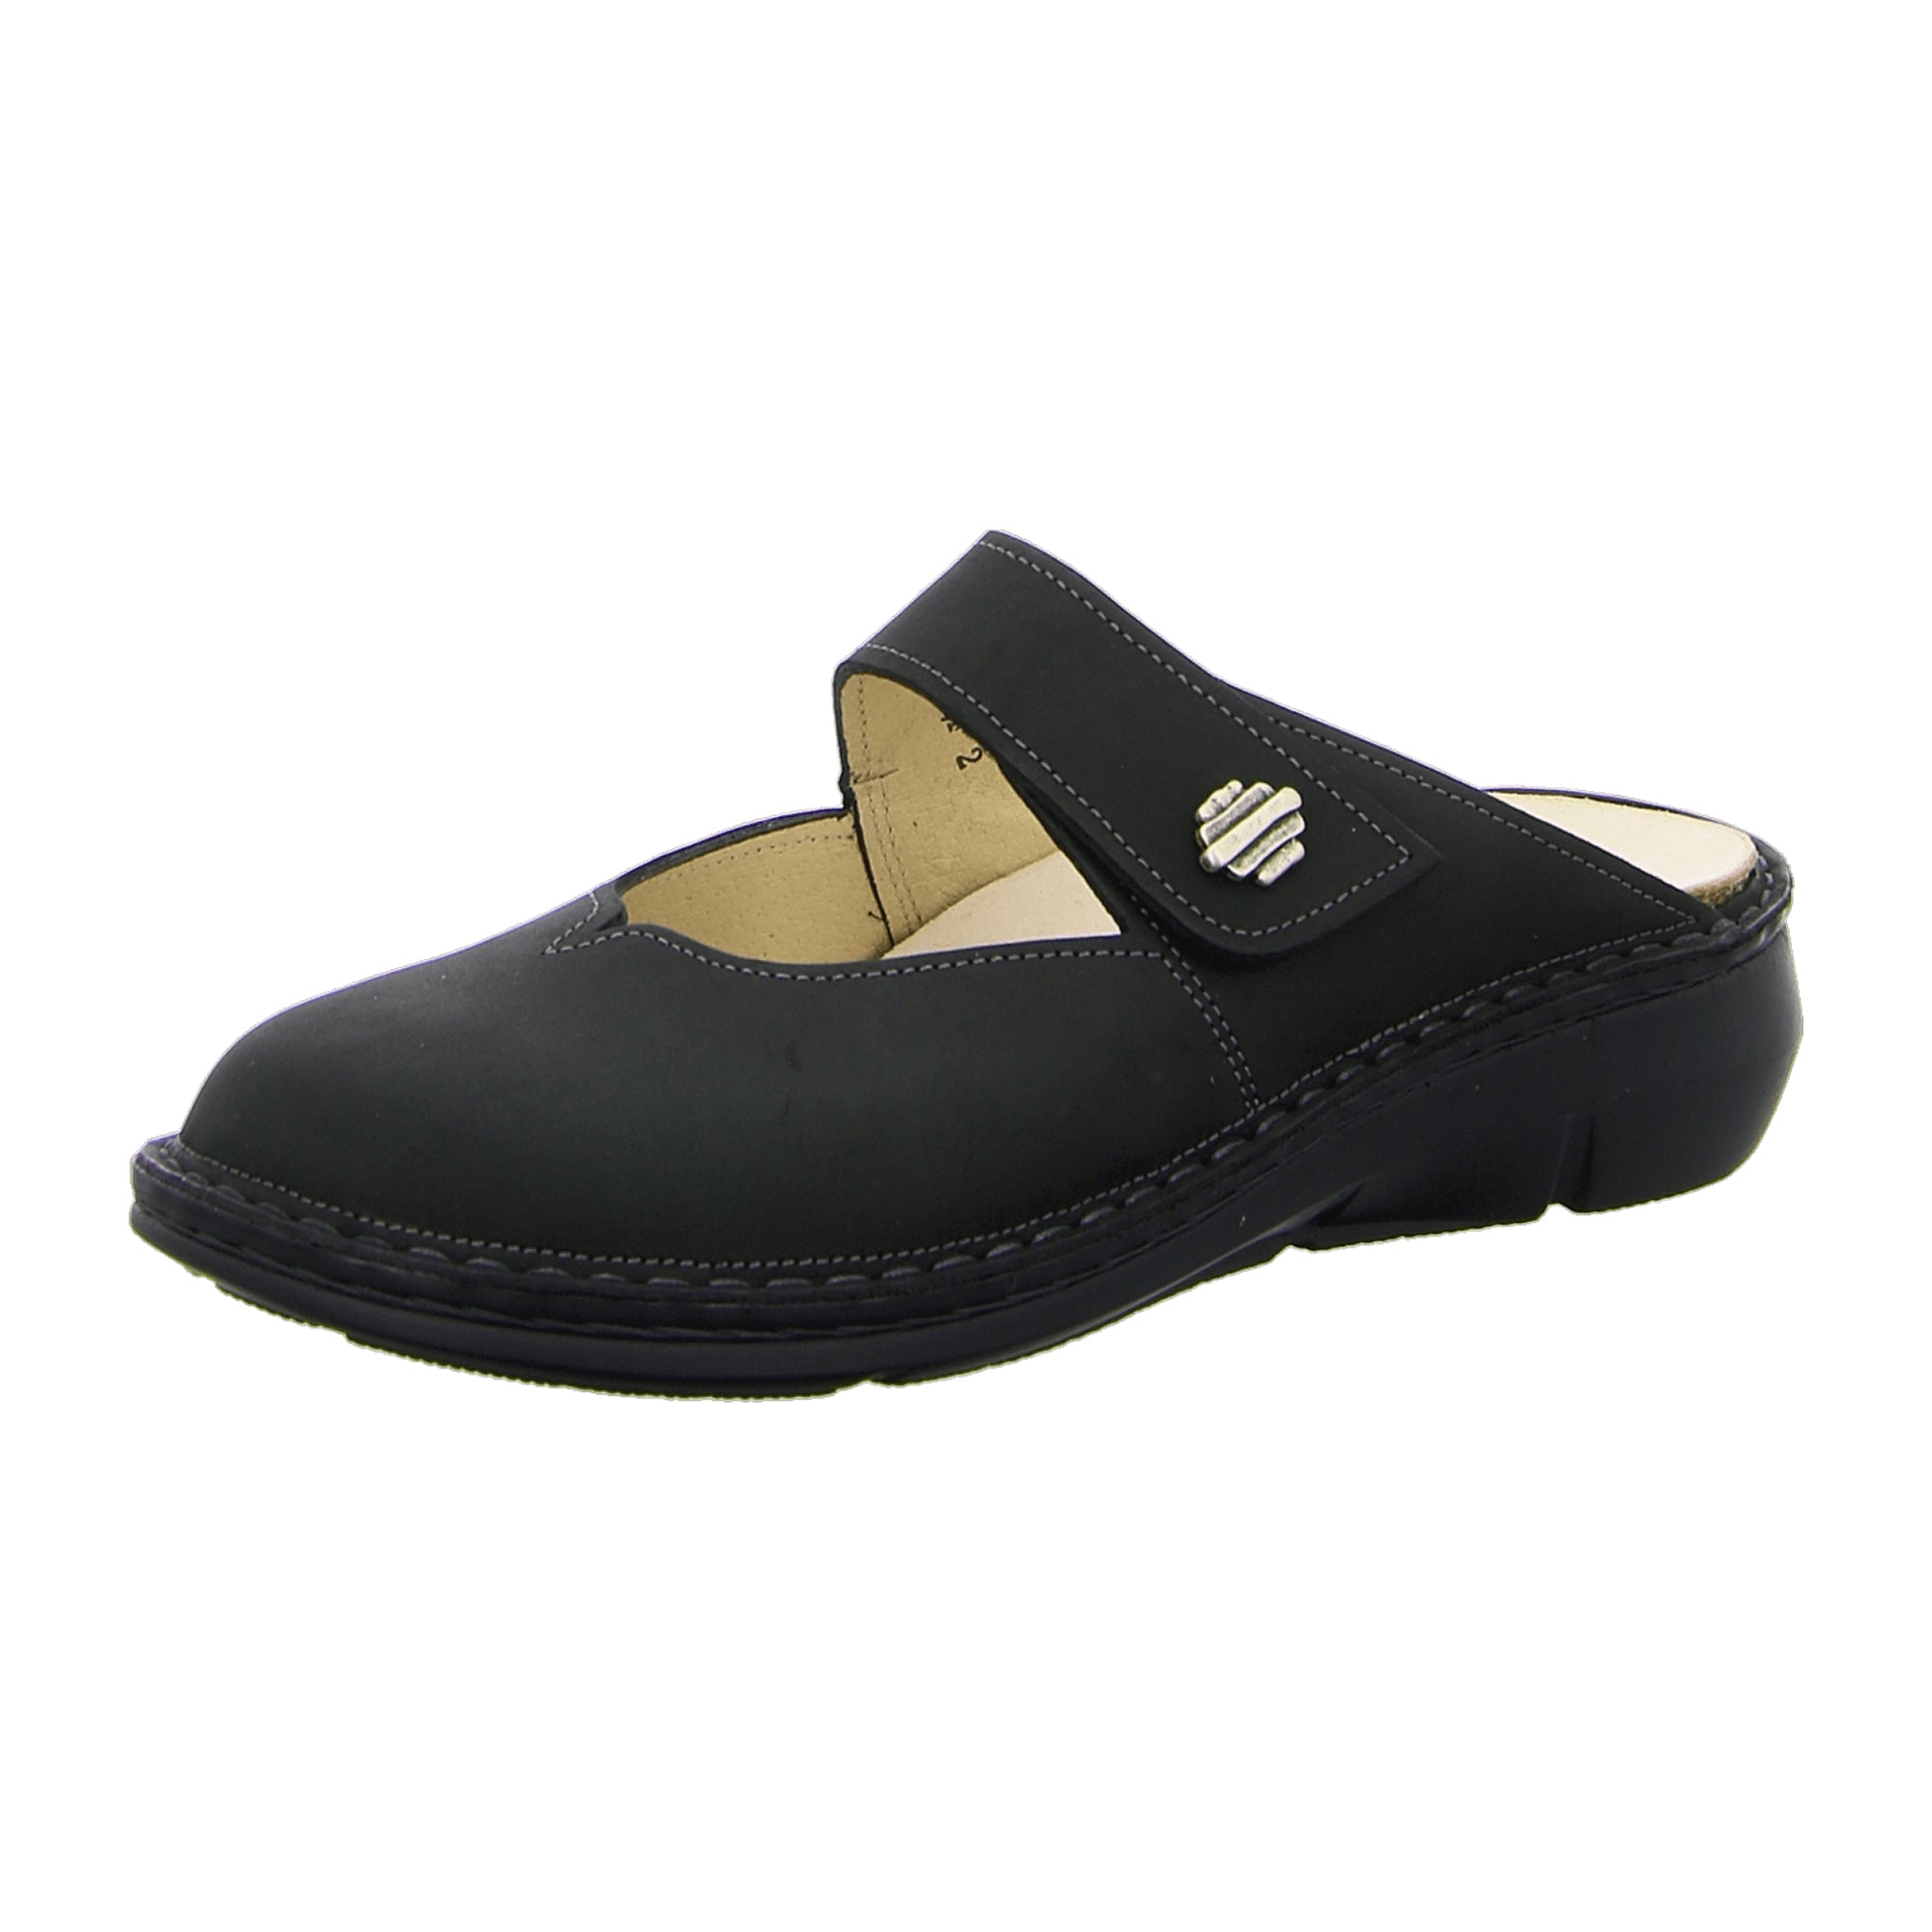 Finn Comfort Women's Sandals - Stylish & Comfortable Black Slides